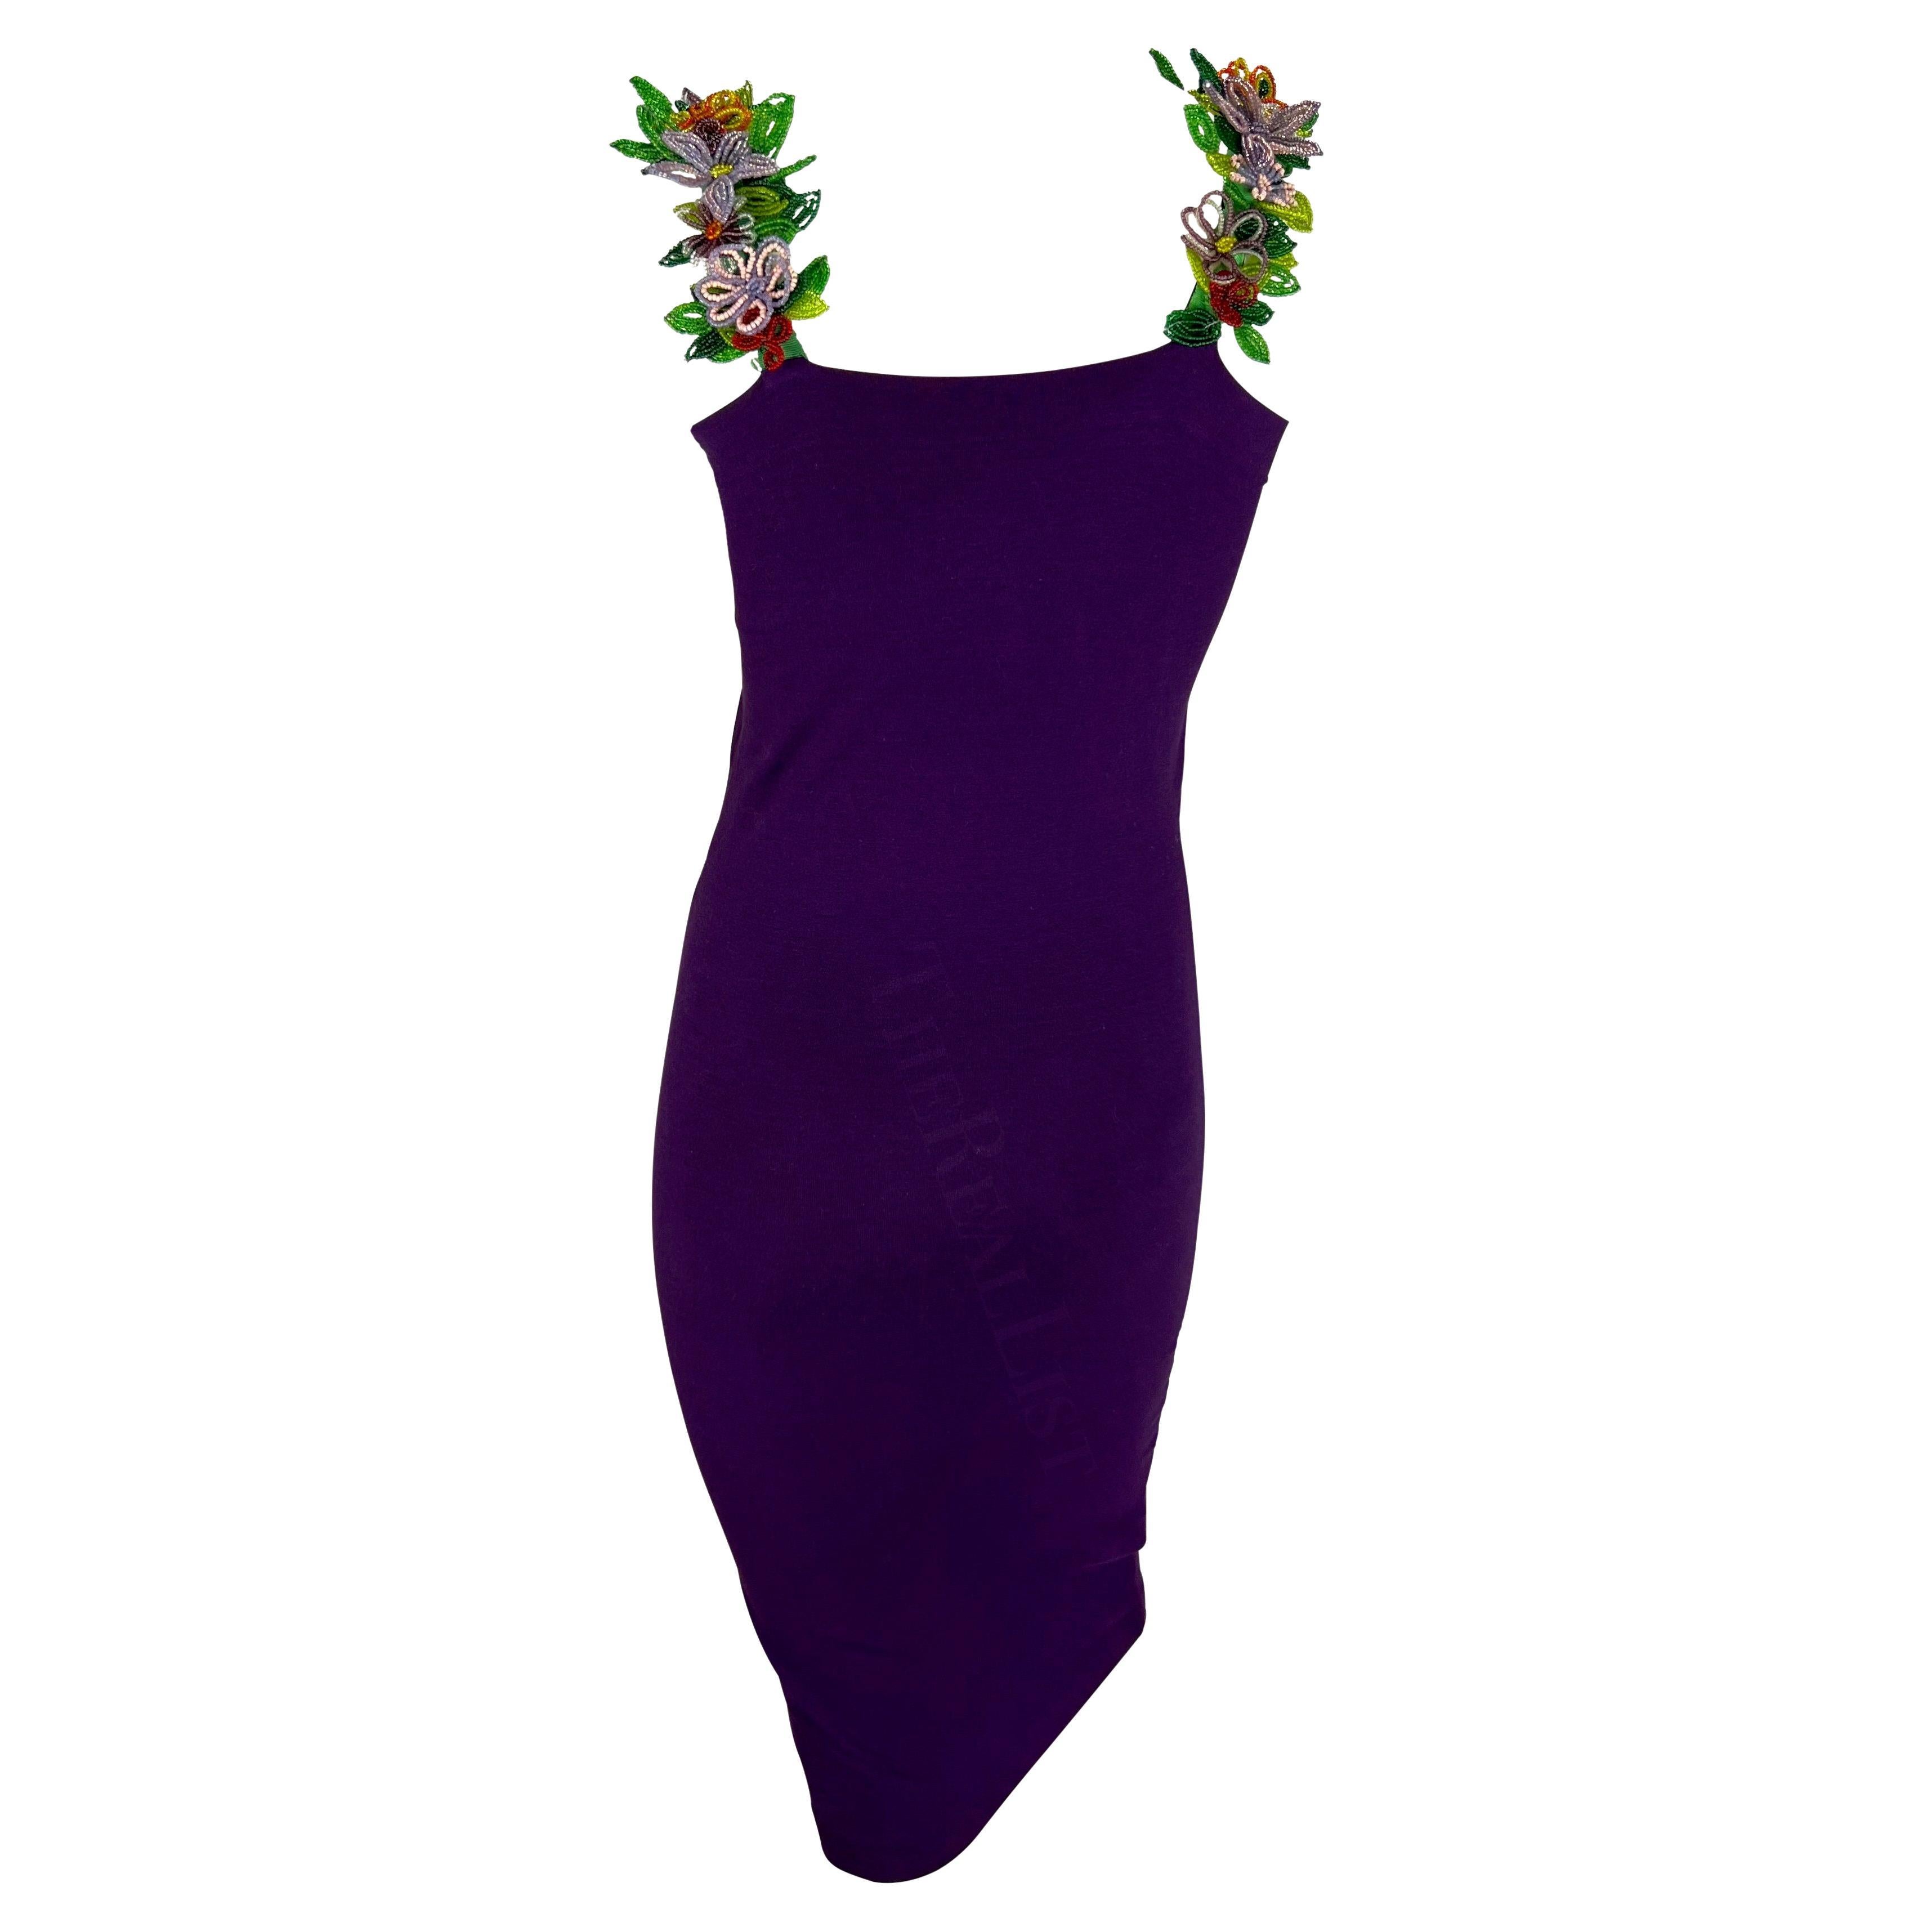 S/S 1992 Dolce & Gabbana Purple Mini Dress Floral Beaded Straps For Sale 3